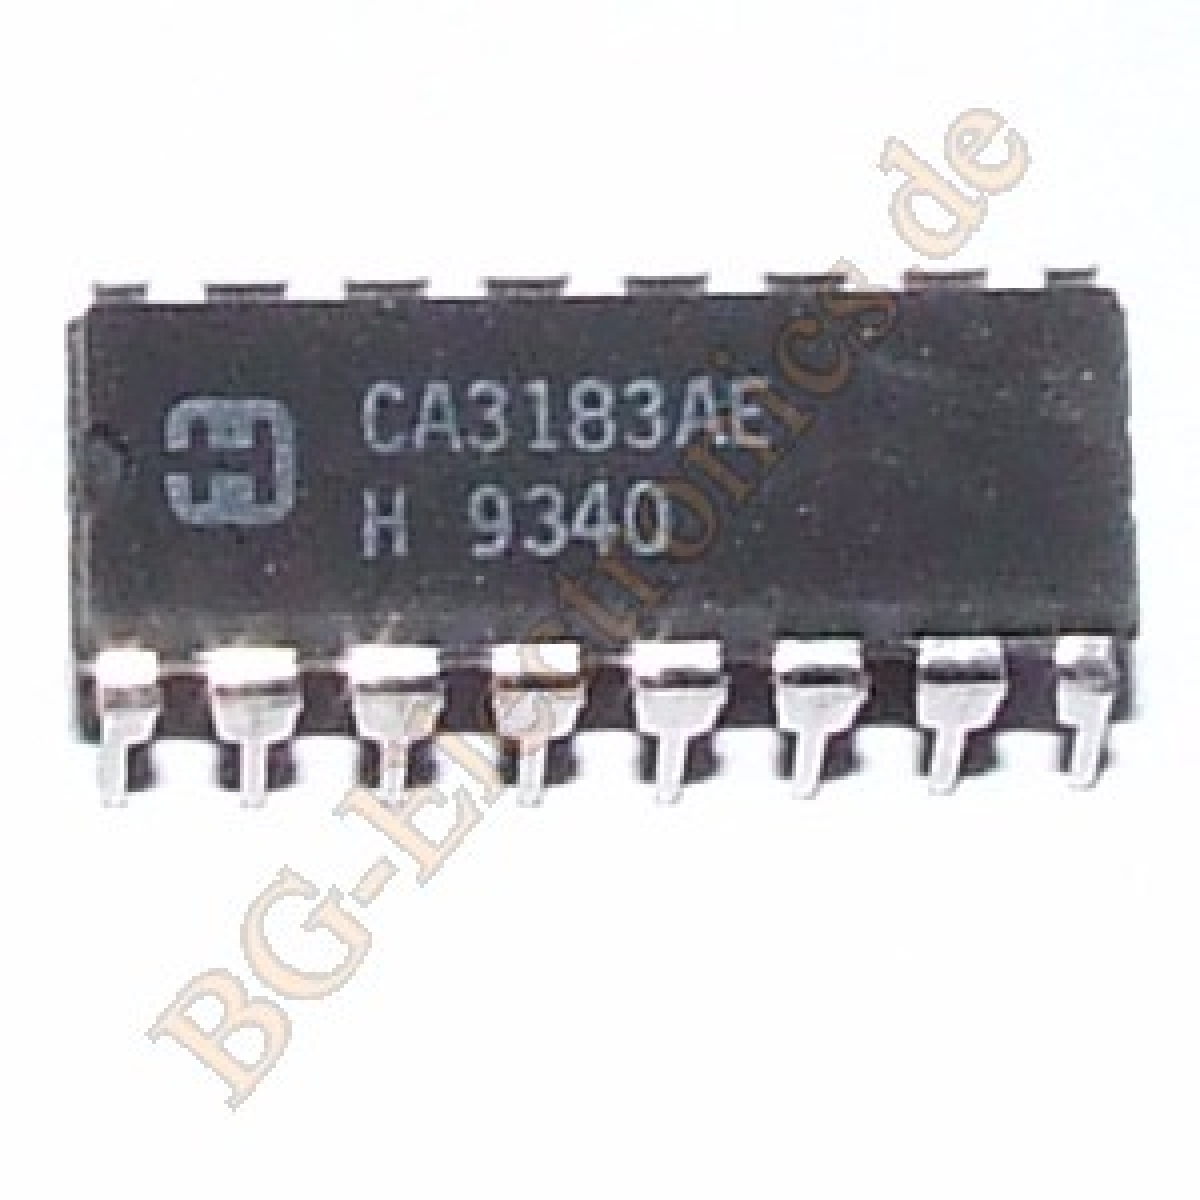 30x 30k Ω Ohm//30000r 1206 SMD 0.25w 200v Resistors//Resistors Chip SMT